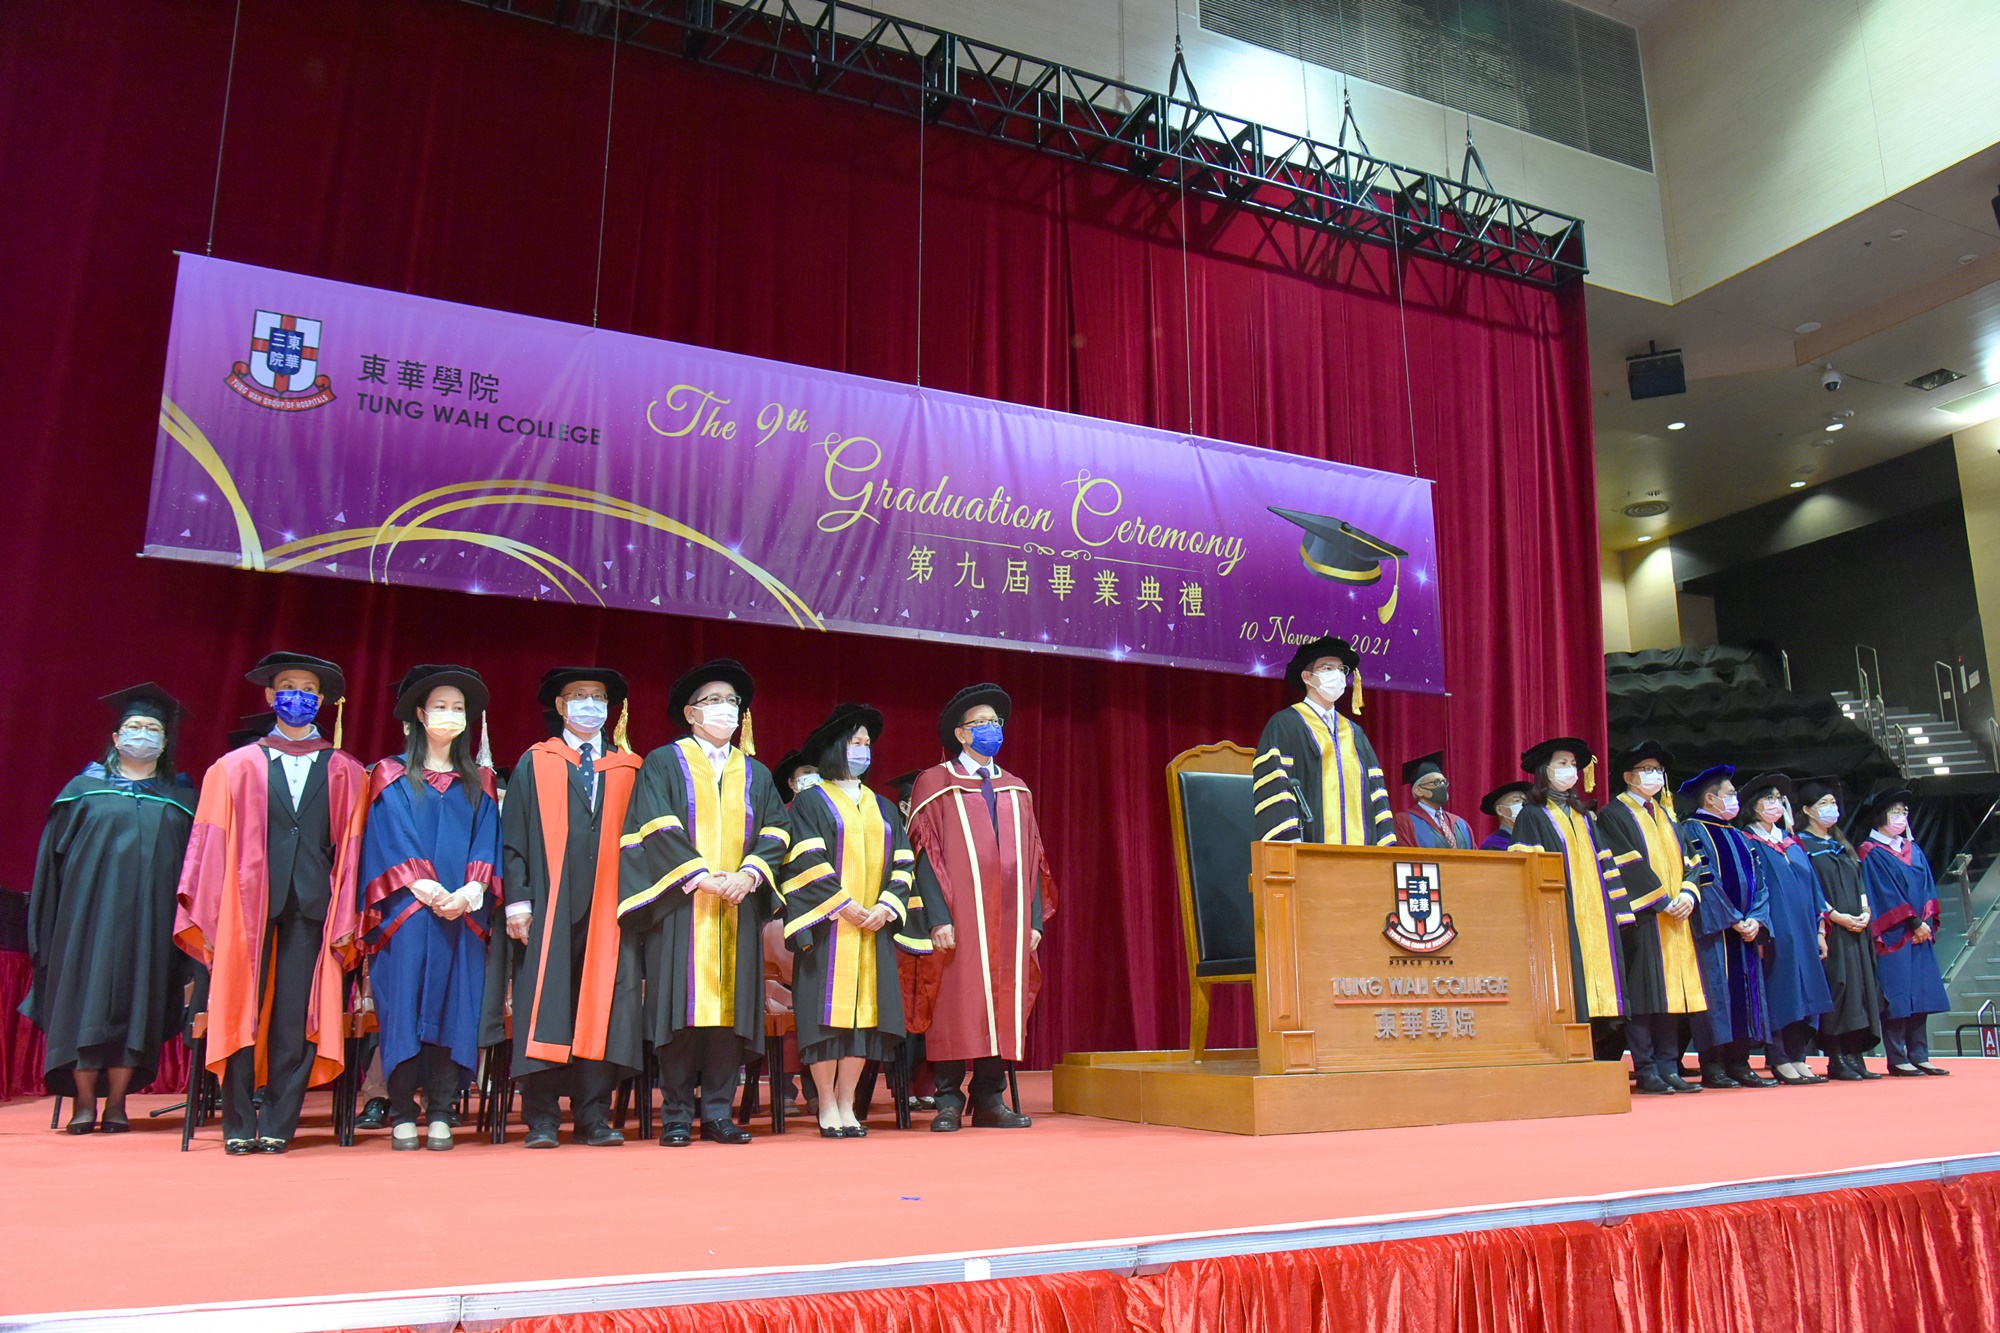 The 9th Graduation Ceremony